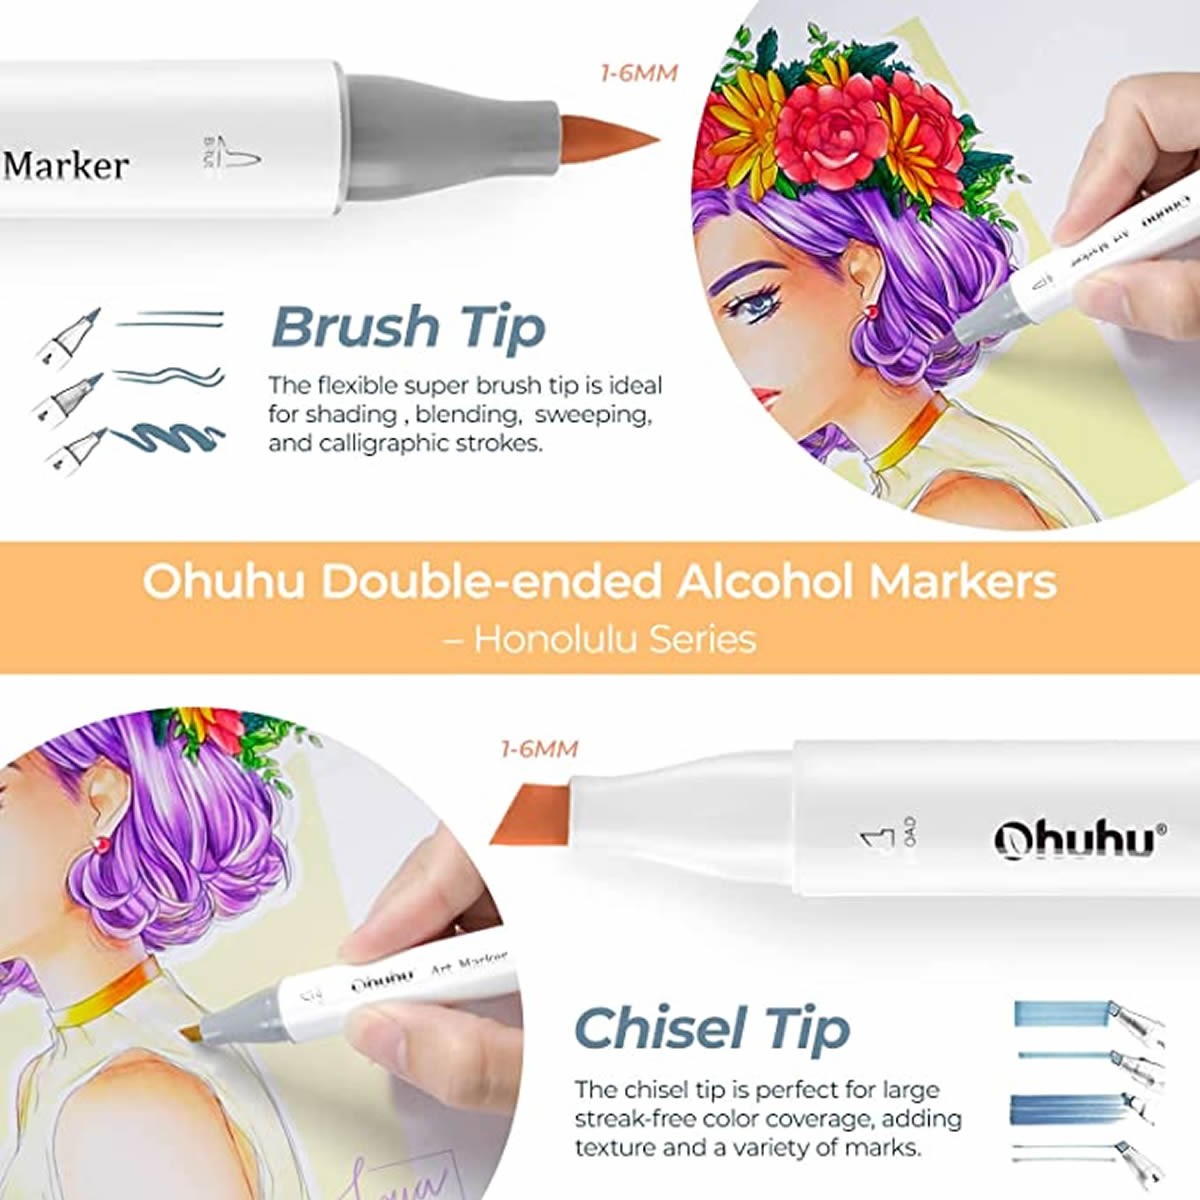 OHUHU Honolulu Alcohol Art Markers Σετ Μαρκαδόρων 120 χρωμάτων Brush & Chisel